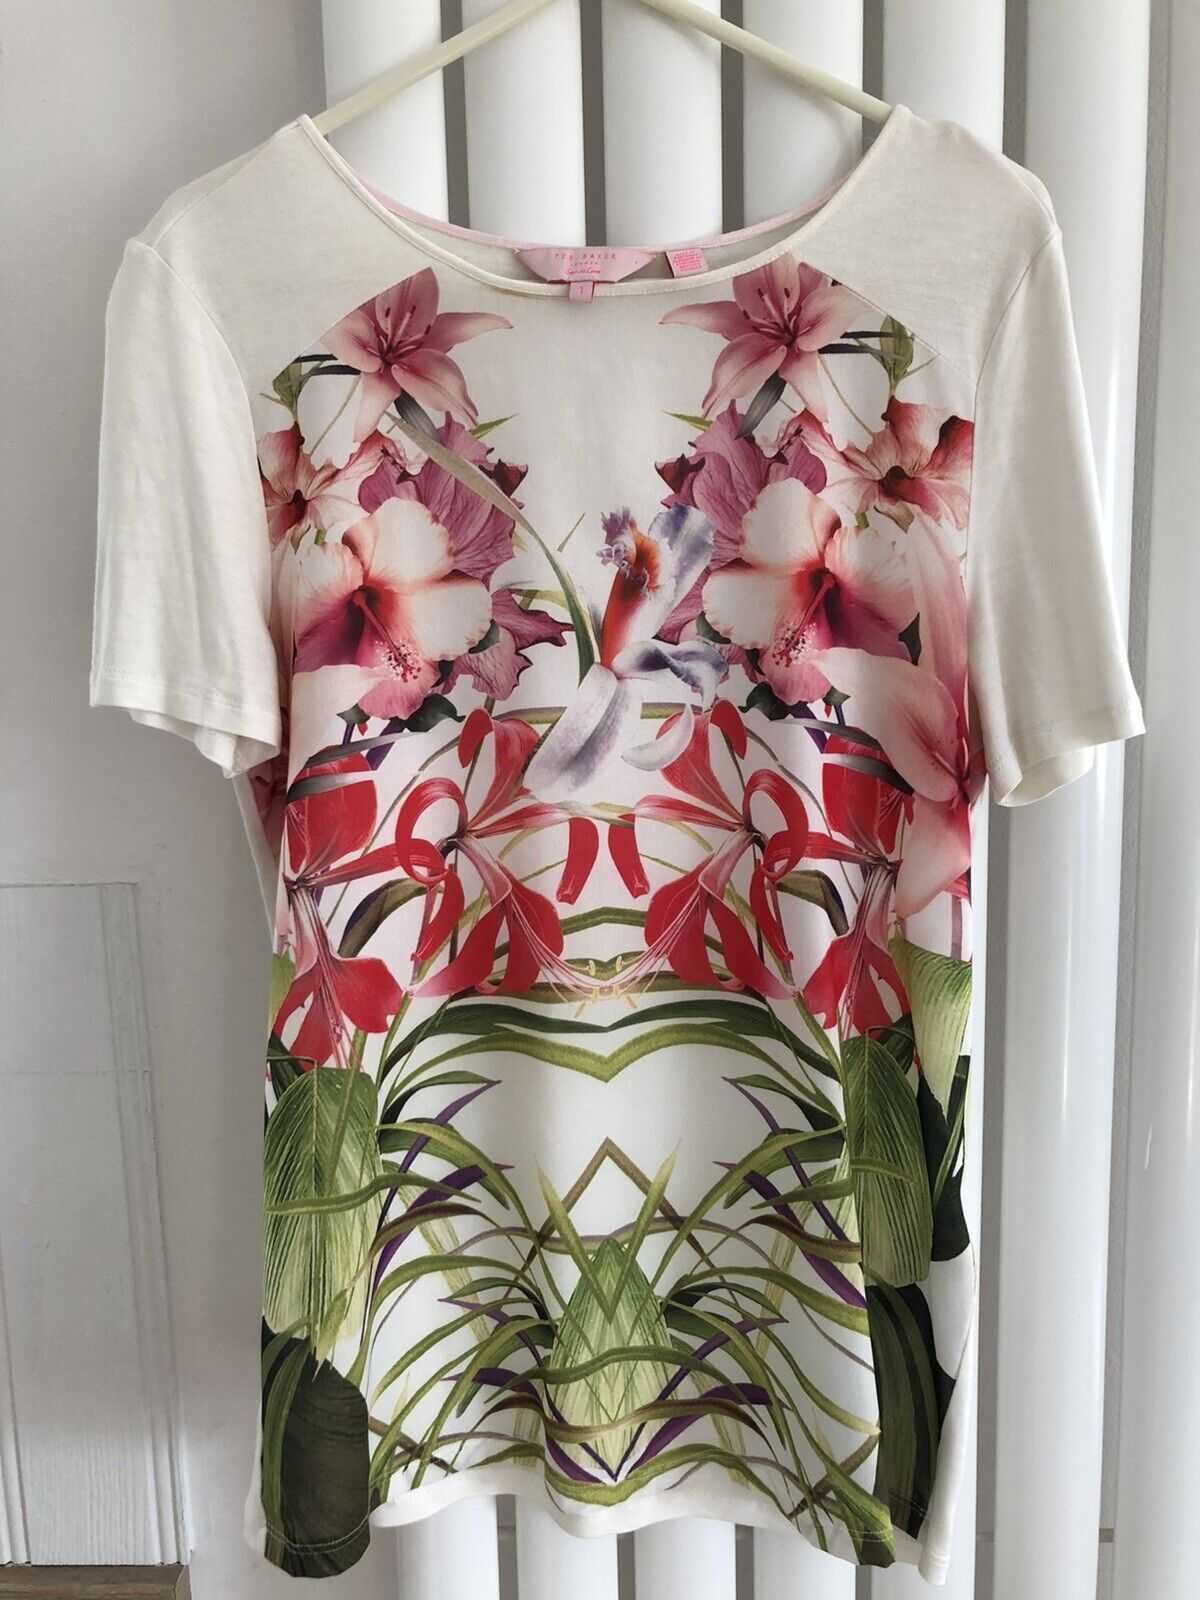 TED BAKER T-Shirt блуза S и М размер с флорални мотиви, цветя